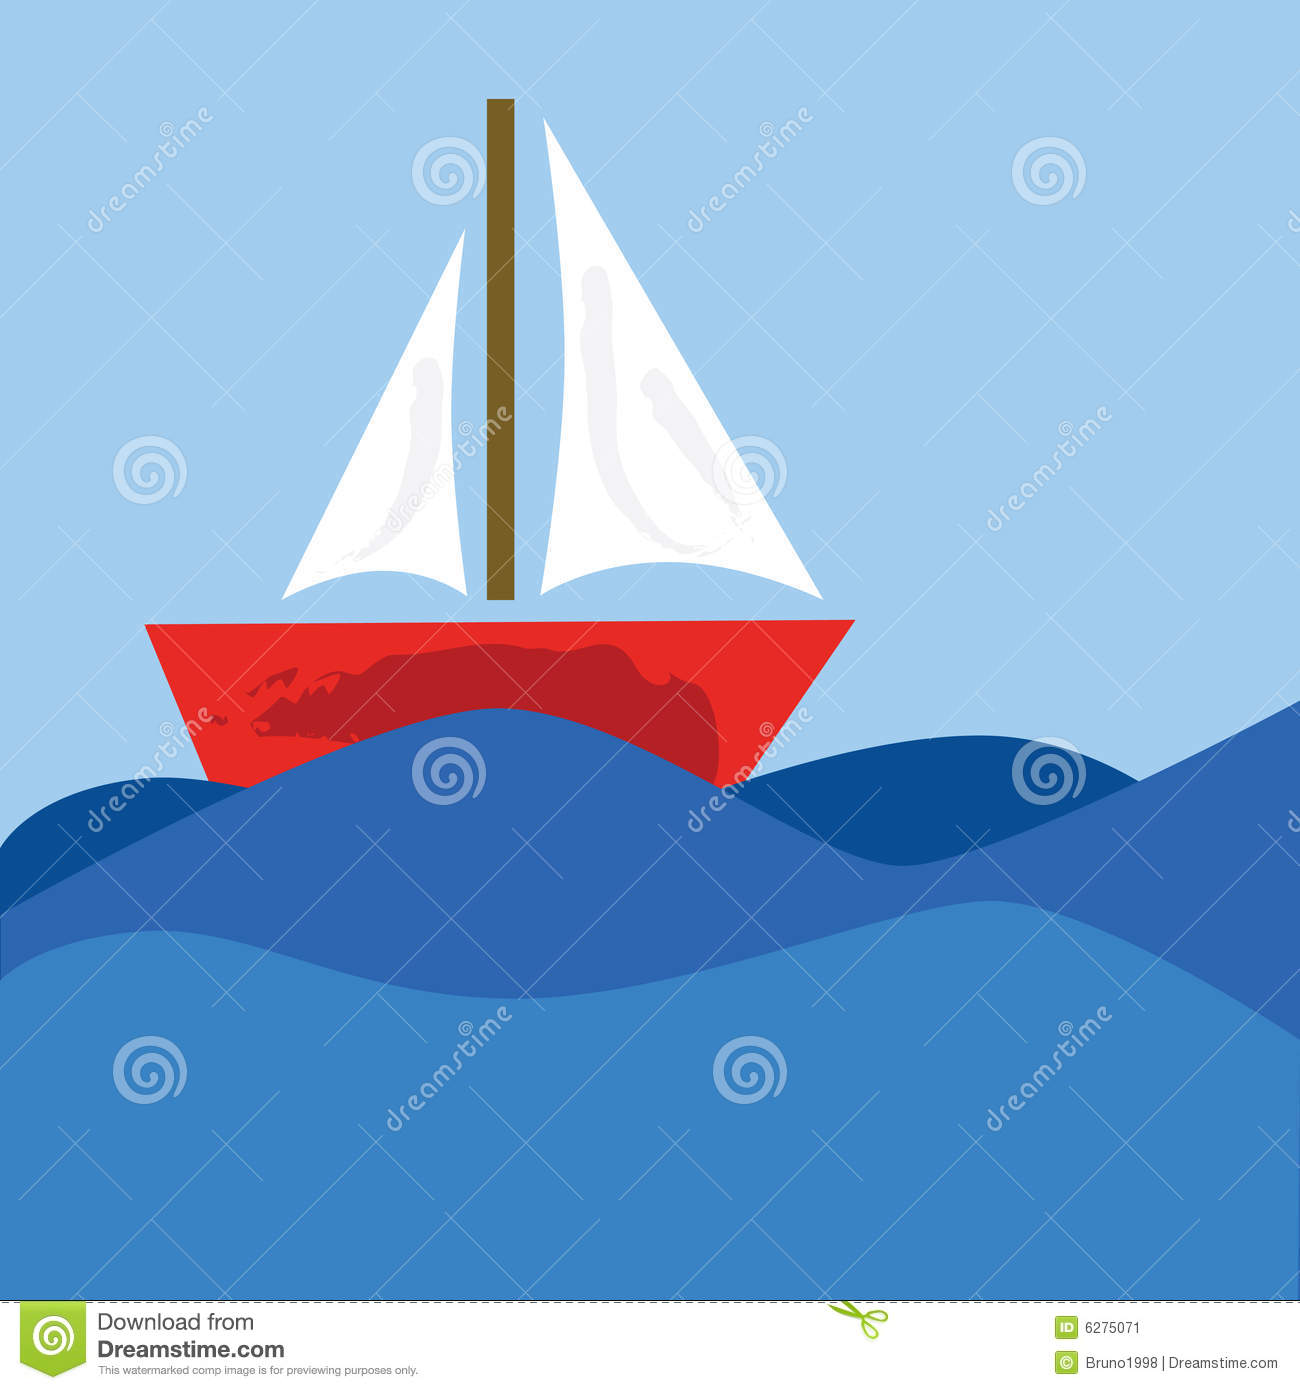 Cartoon Sailboat Stock Image   Image  6275071